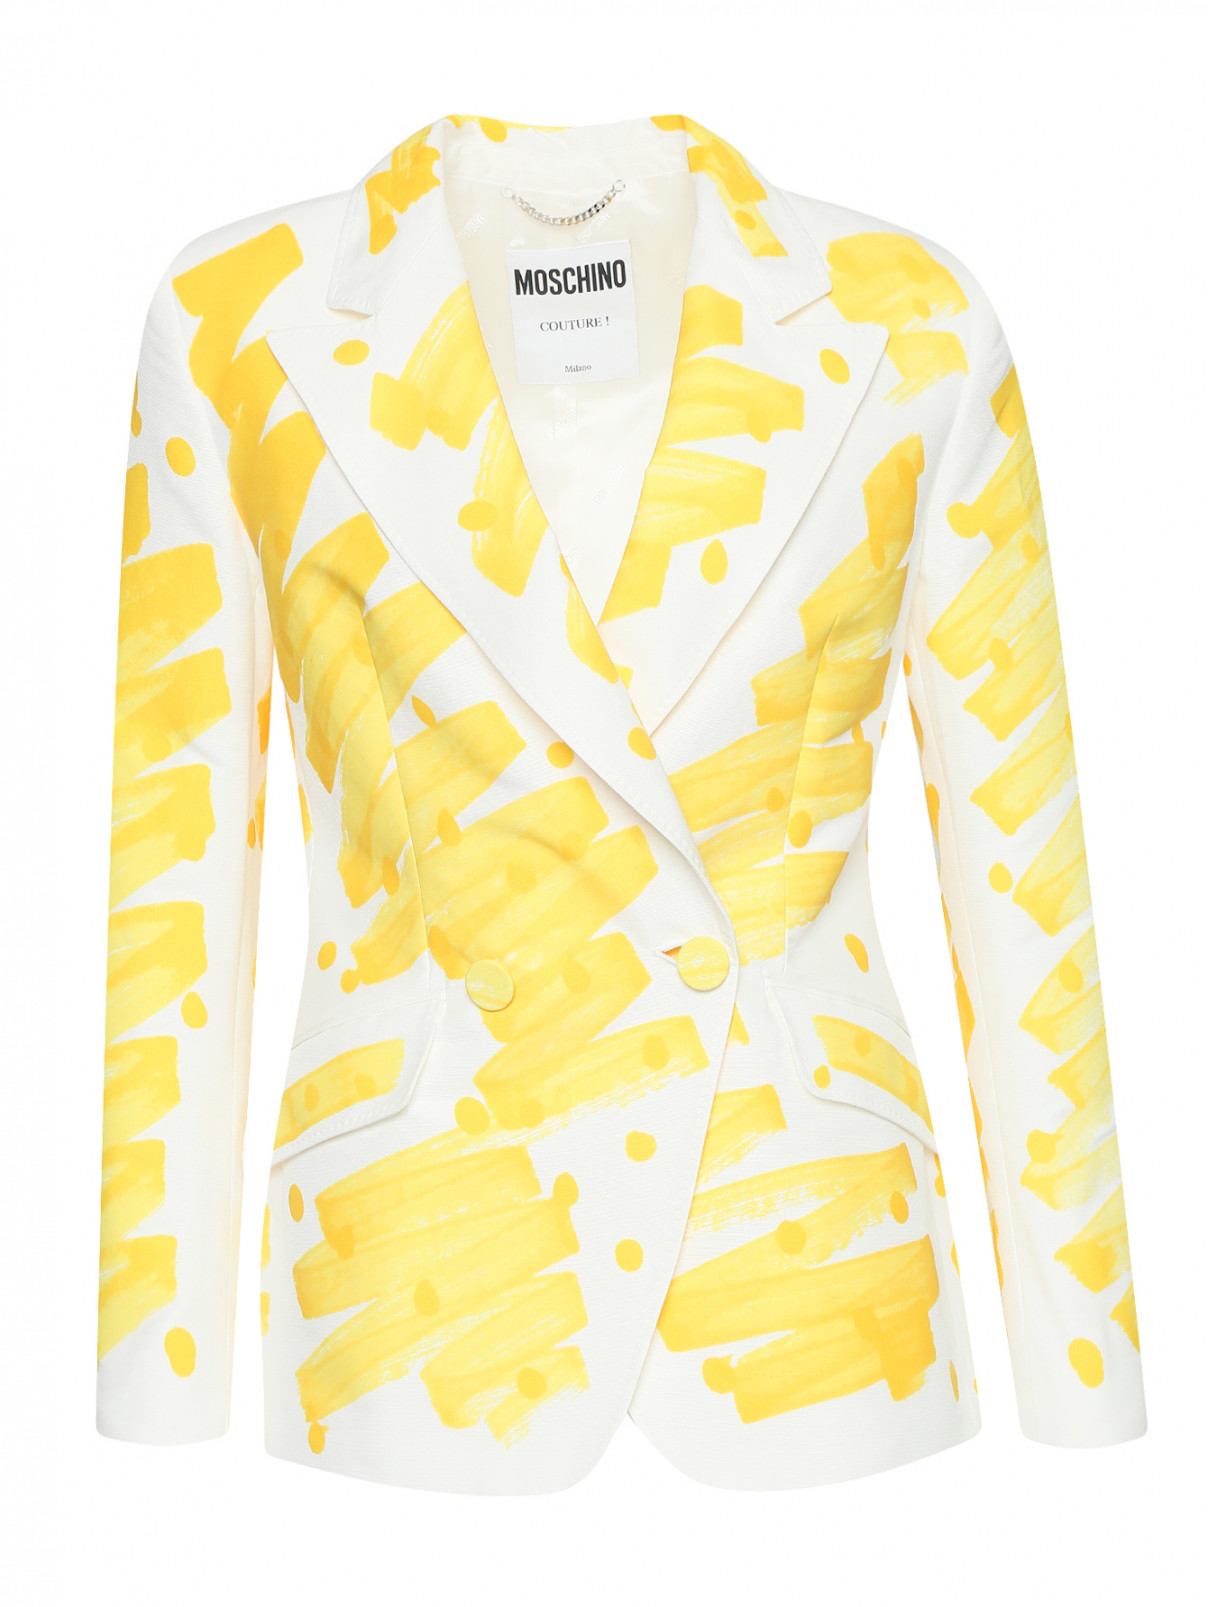 Жакет из хлопка и шелка с принтом Moschino  –  Общий вид  – Цвет:  Желтый